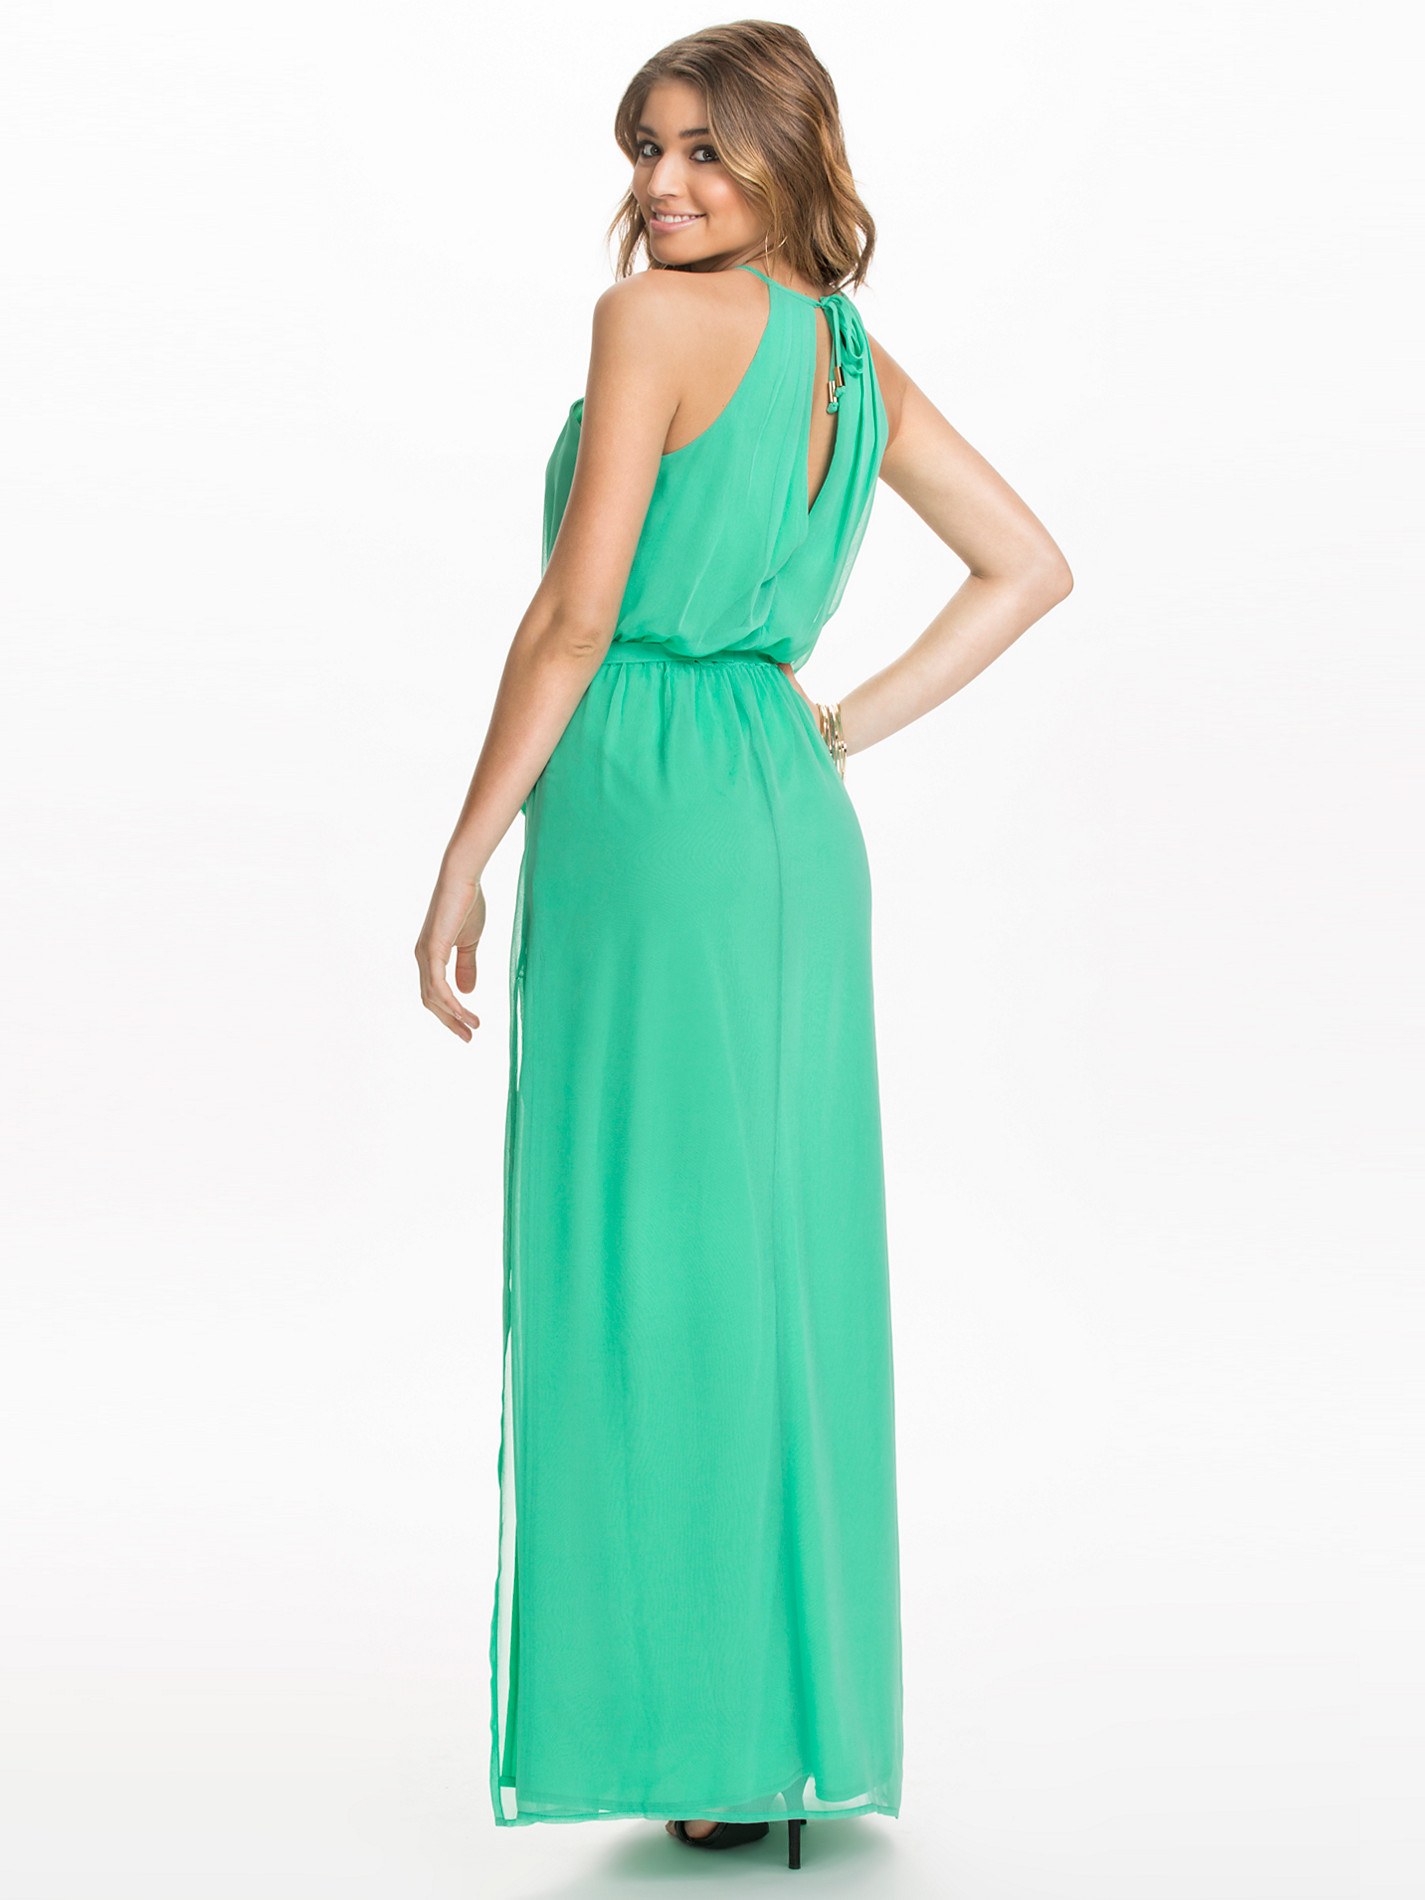 Elegant Green Dress – The Crane